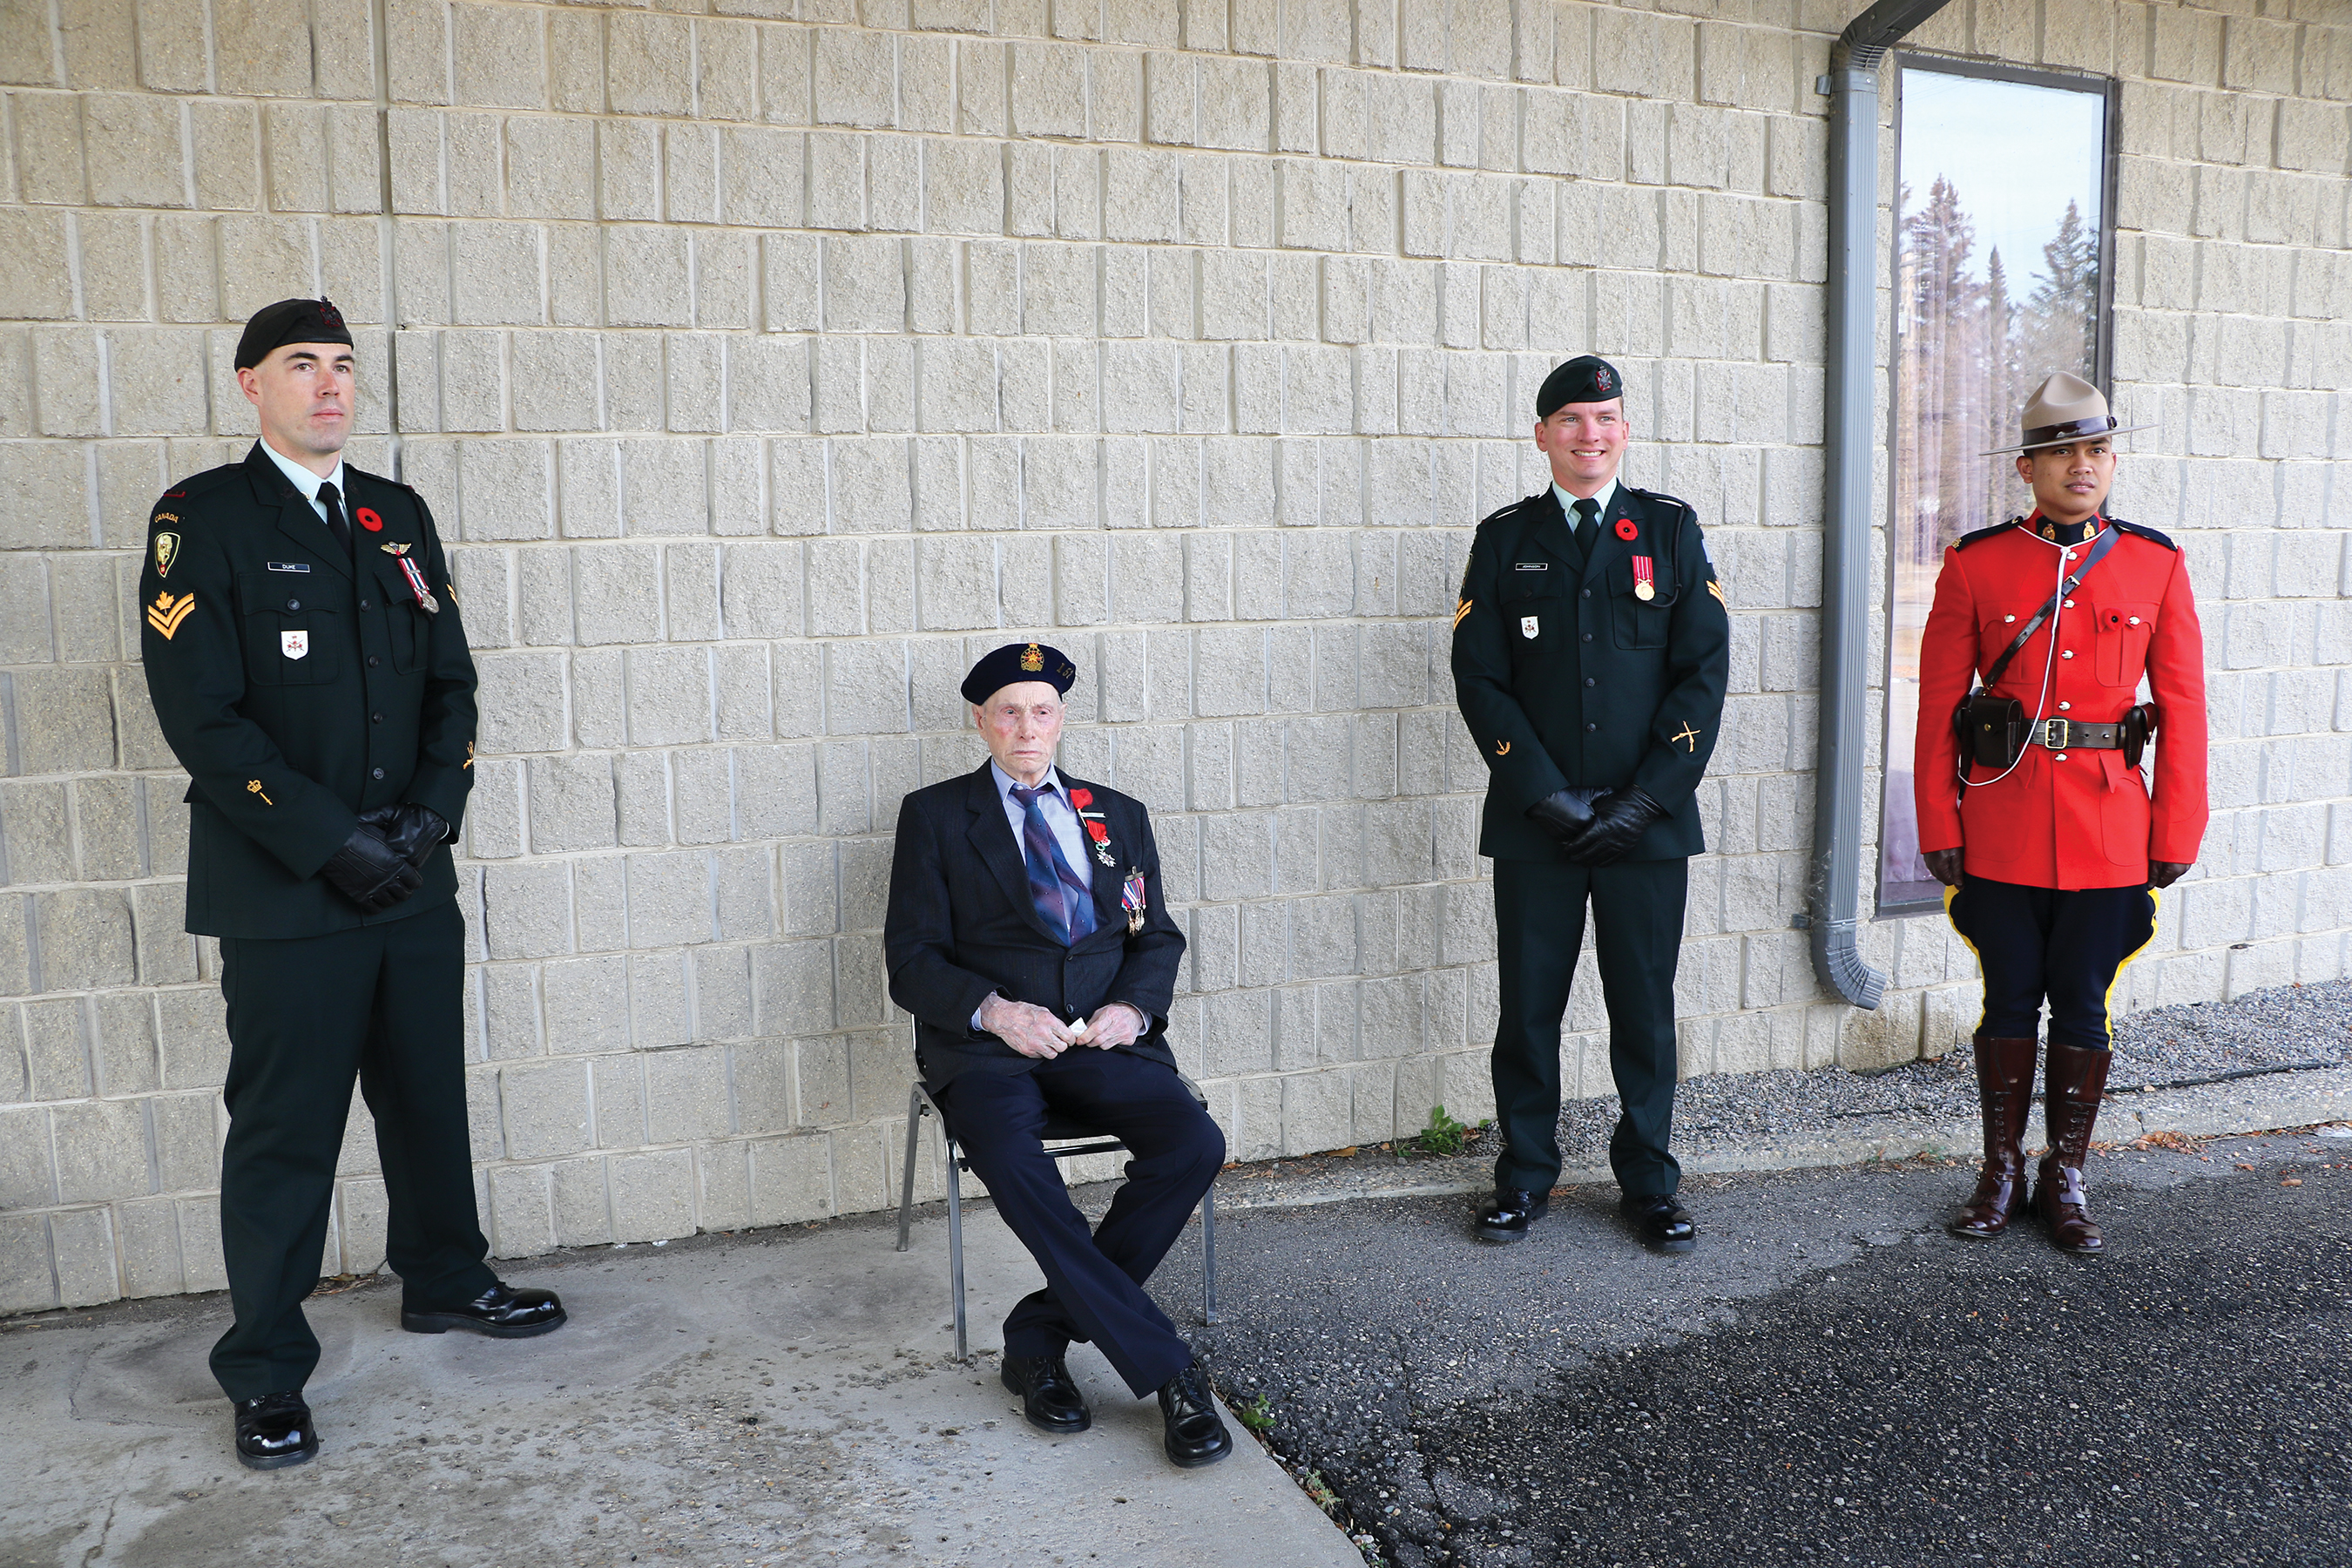 Lloyd Tibbats with members of his former unit, the Regina Rifles.